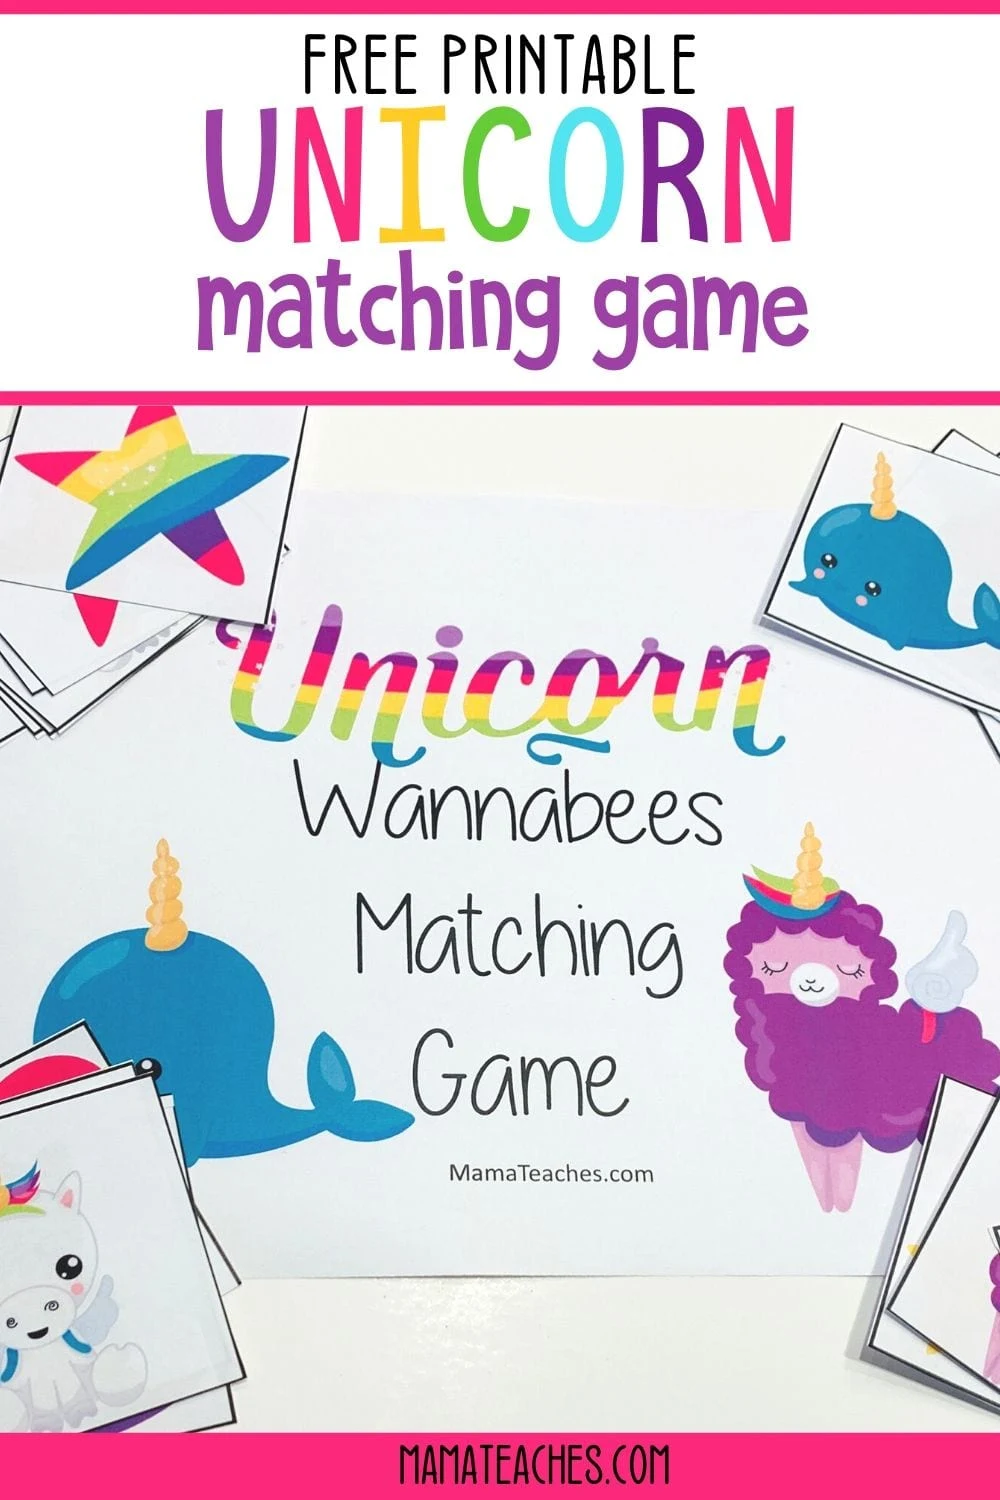 Free Printable Unicorn Matching Game featuring Unicorn Wannabees - MamaTeaches.com